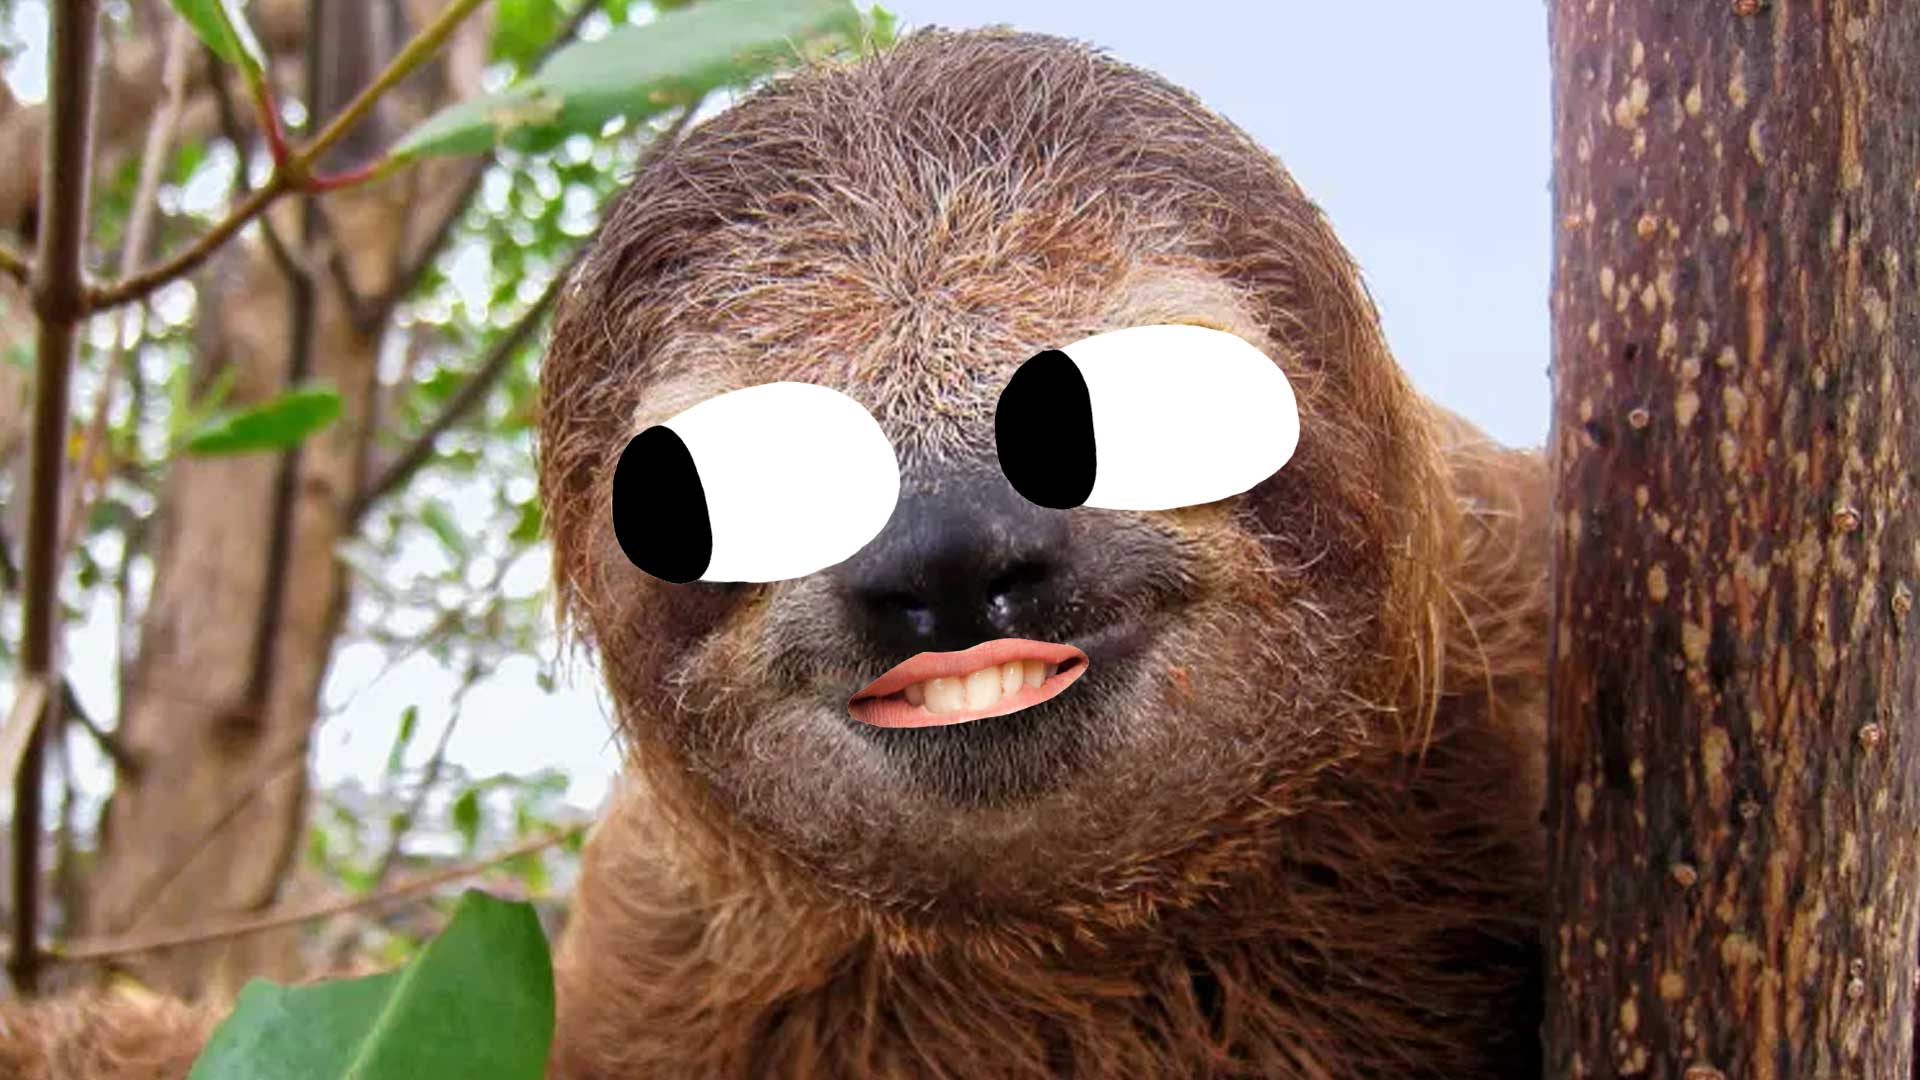 A cheeky sloth